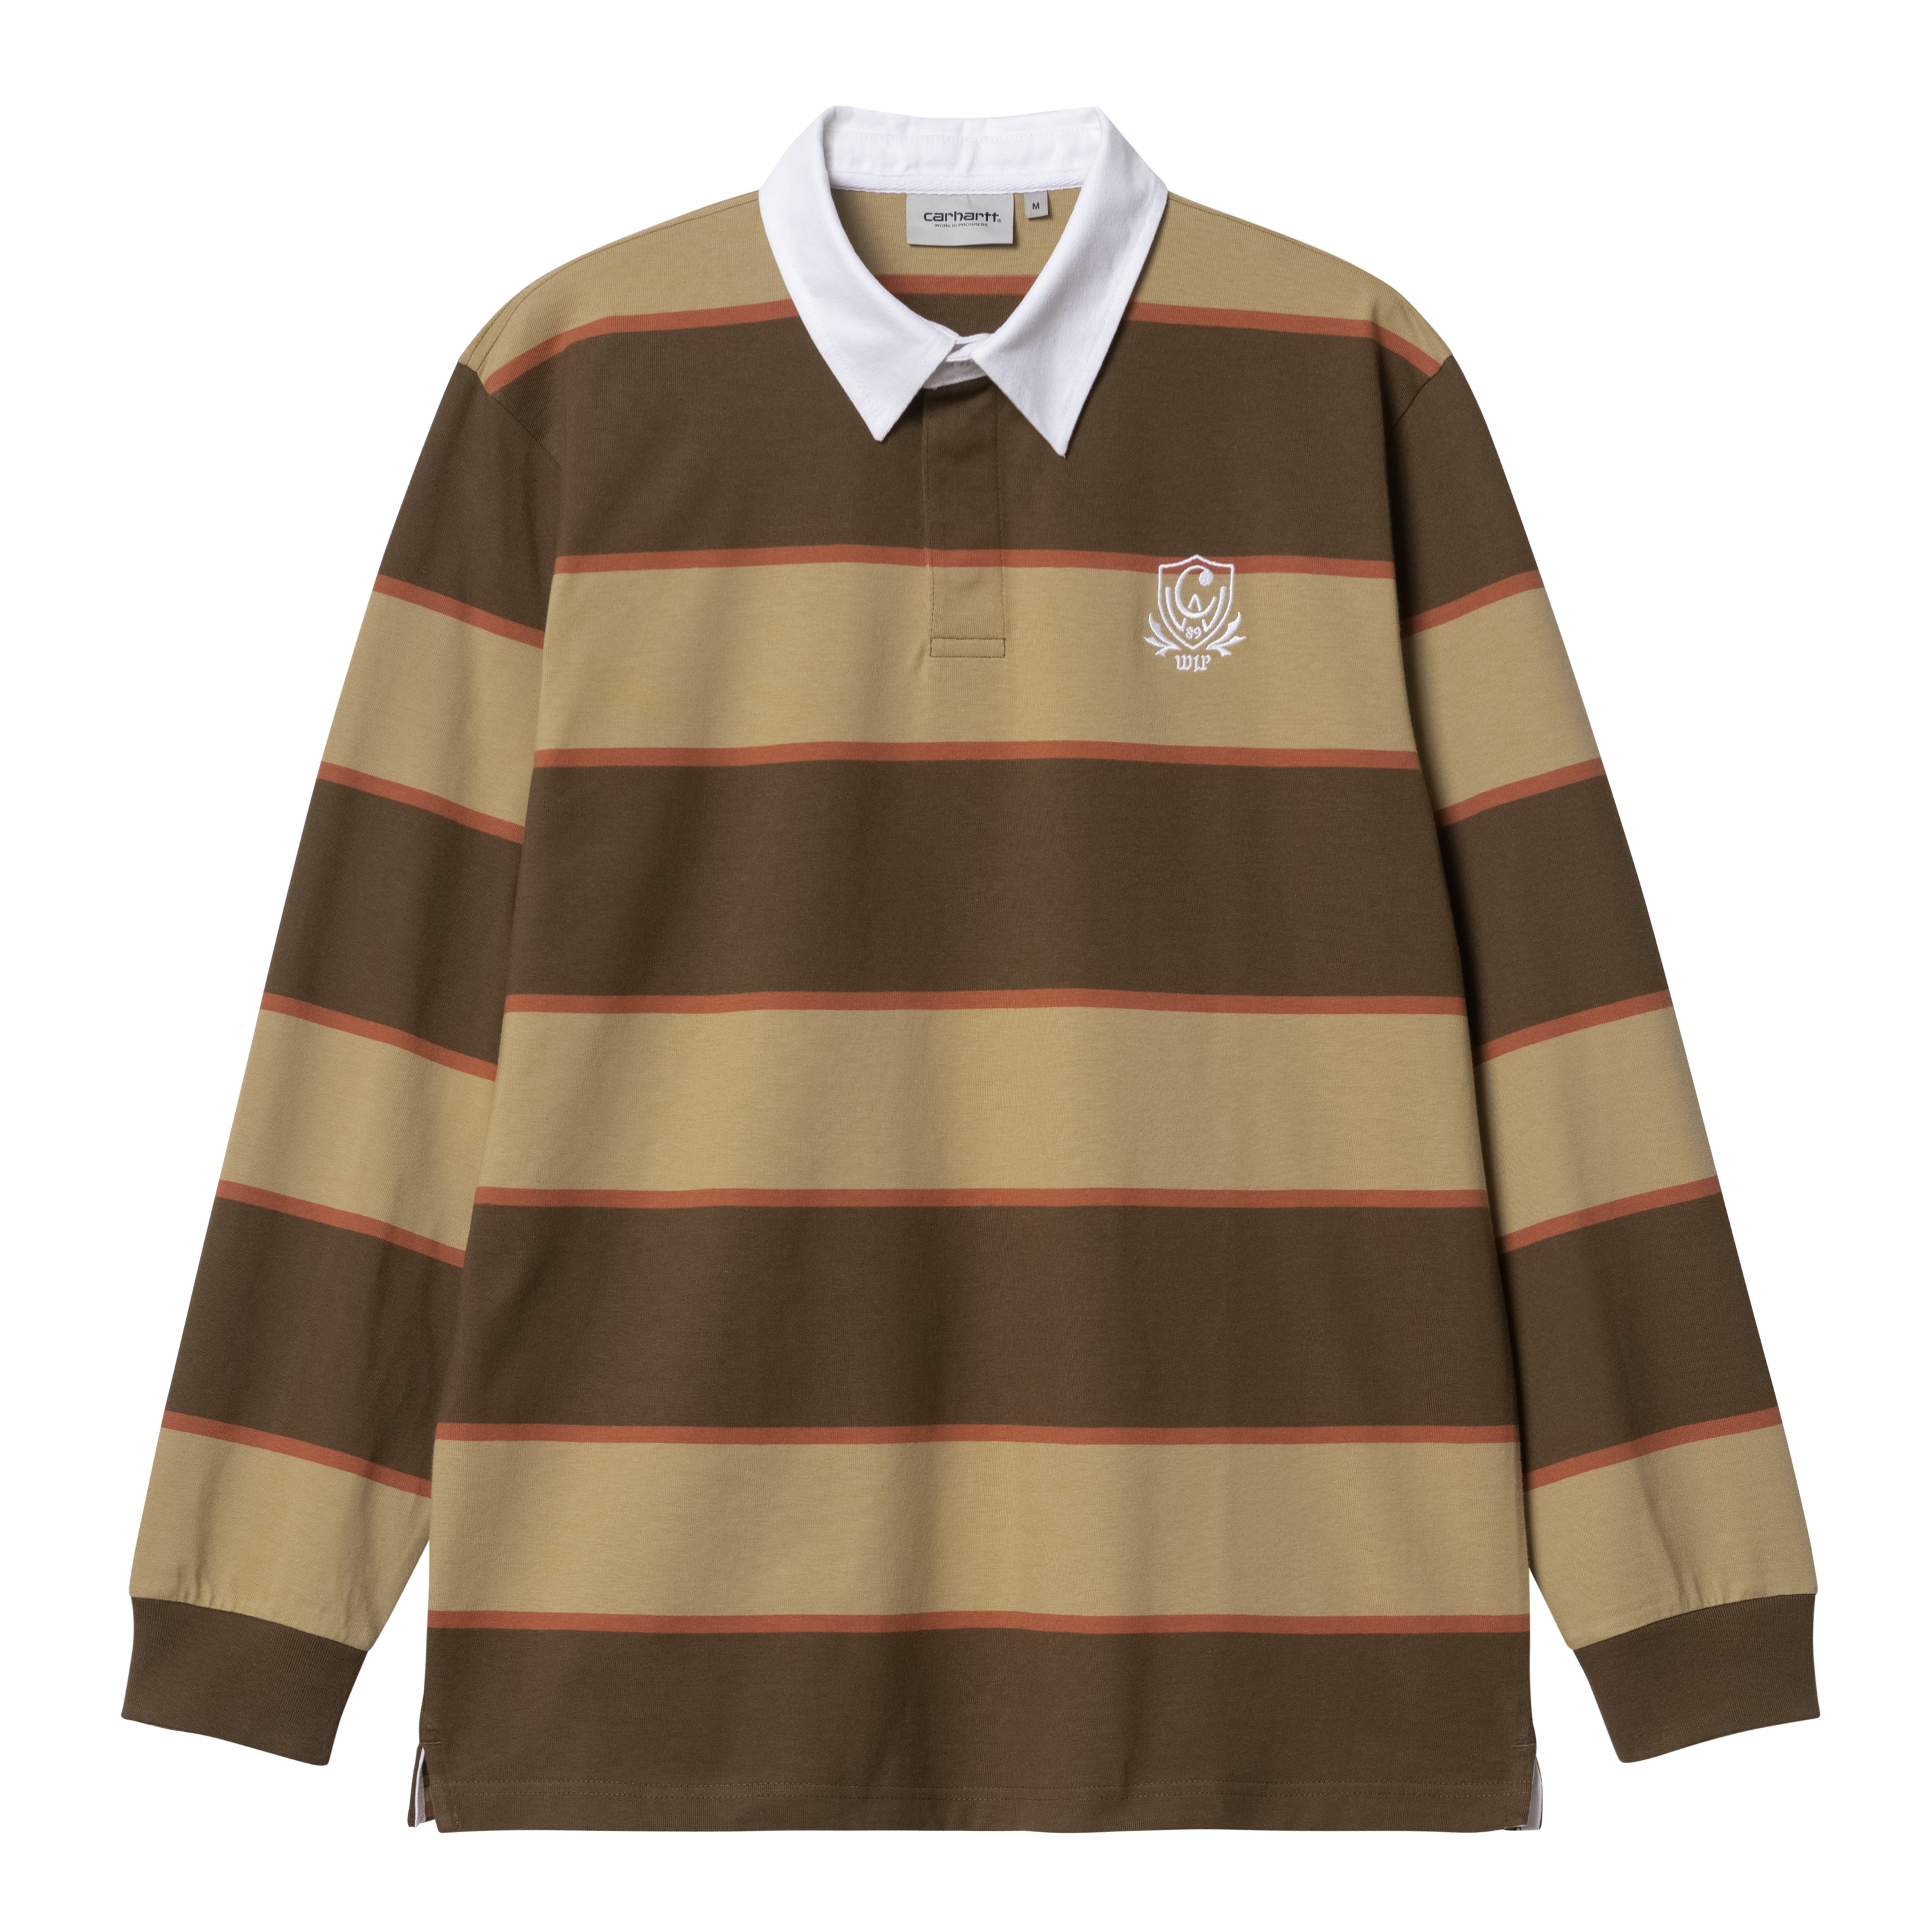 Carhartt WIP Long Sleeve Wilt Rugby Shirt in Marrone